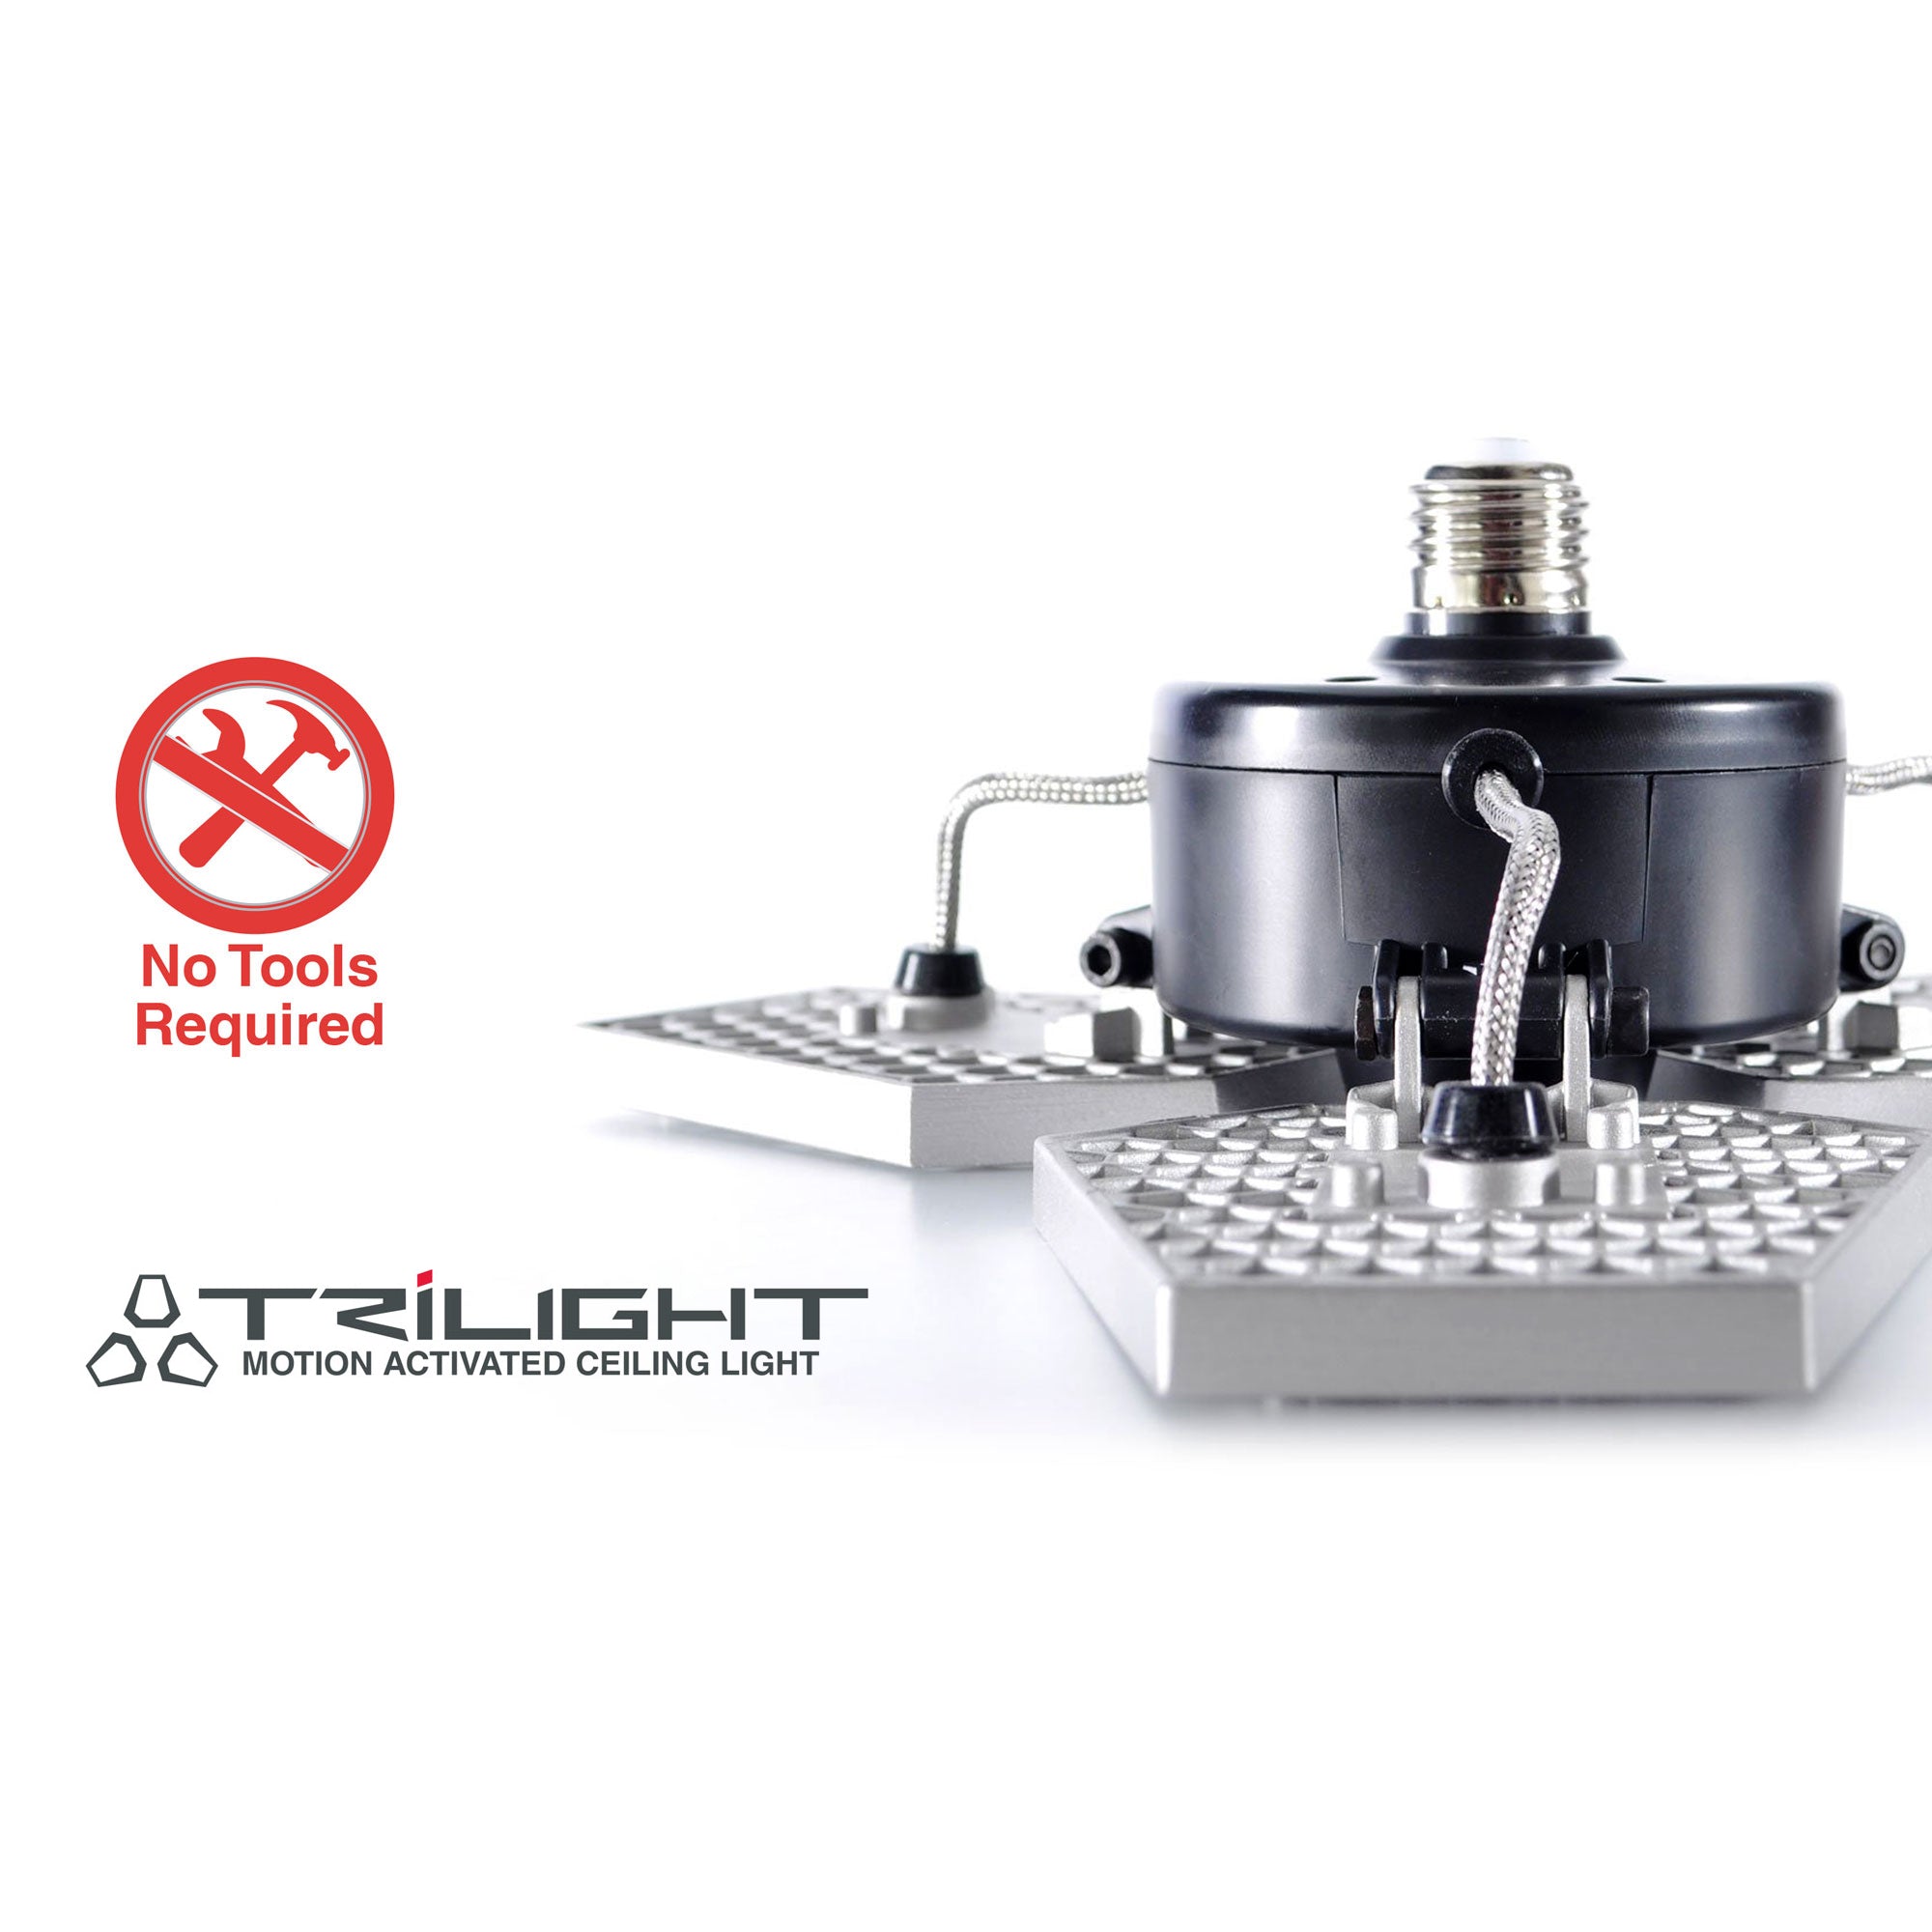 TRiLIGHT motion activated garage light bulb with 3000 TrueLumens | STKR Concepts - striker